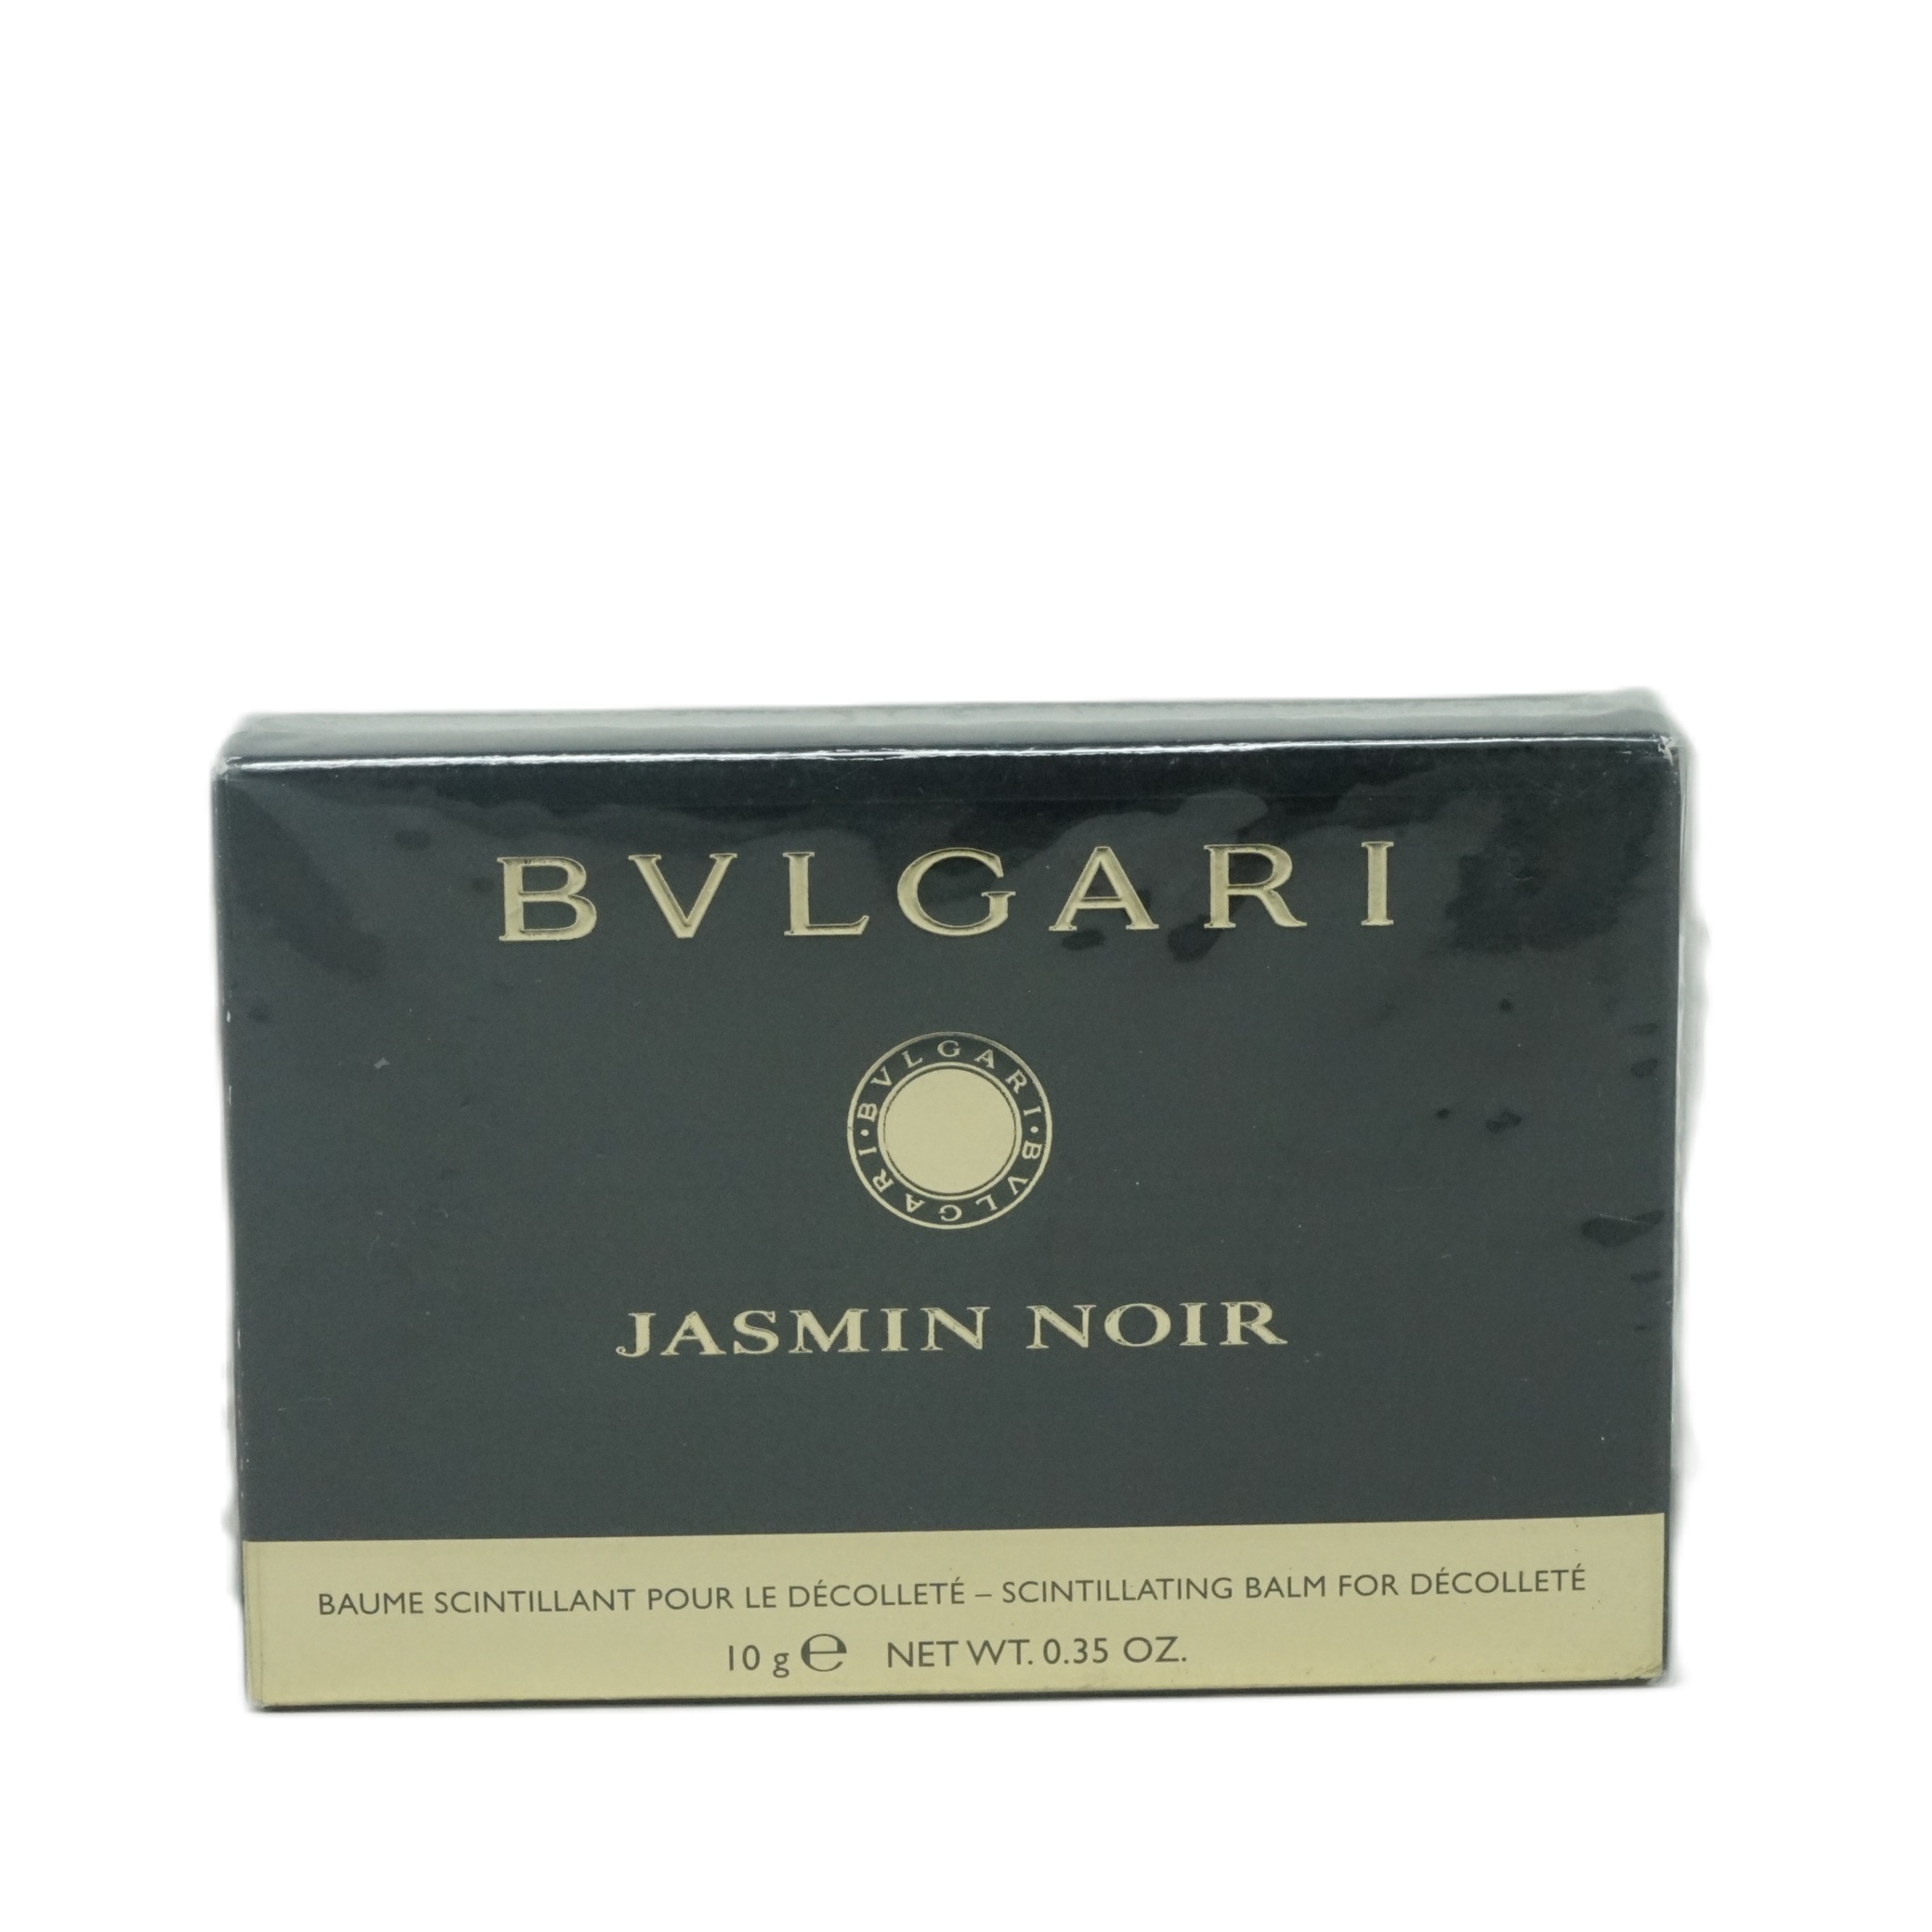 Bvlgari Jasmin Noir Balm for Decolleté 10 g